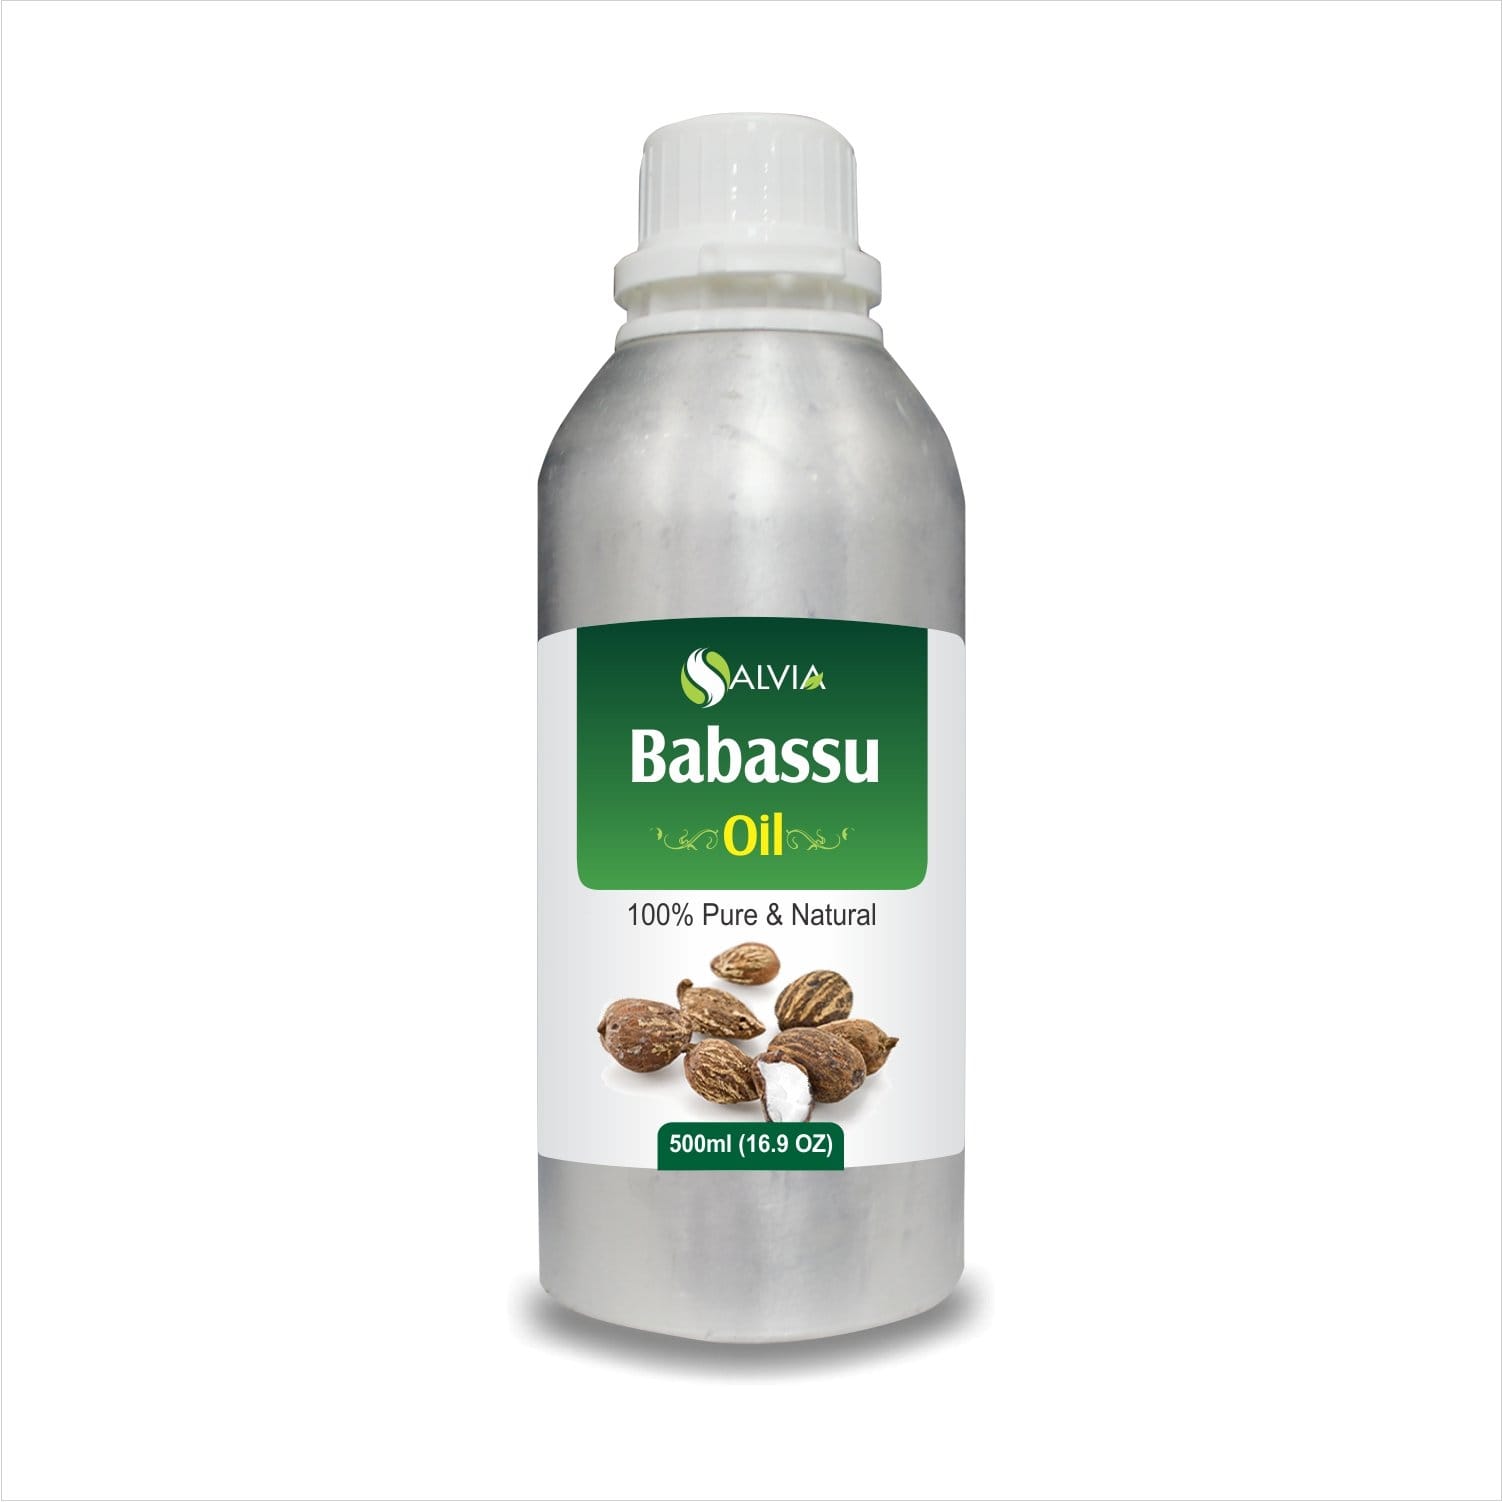 babassu oil for hair benefits